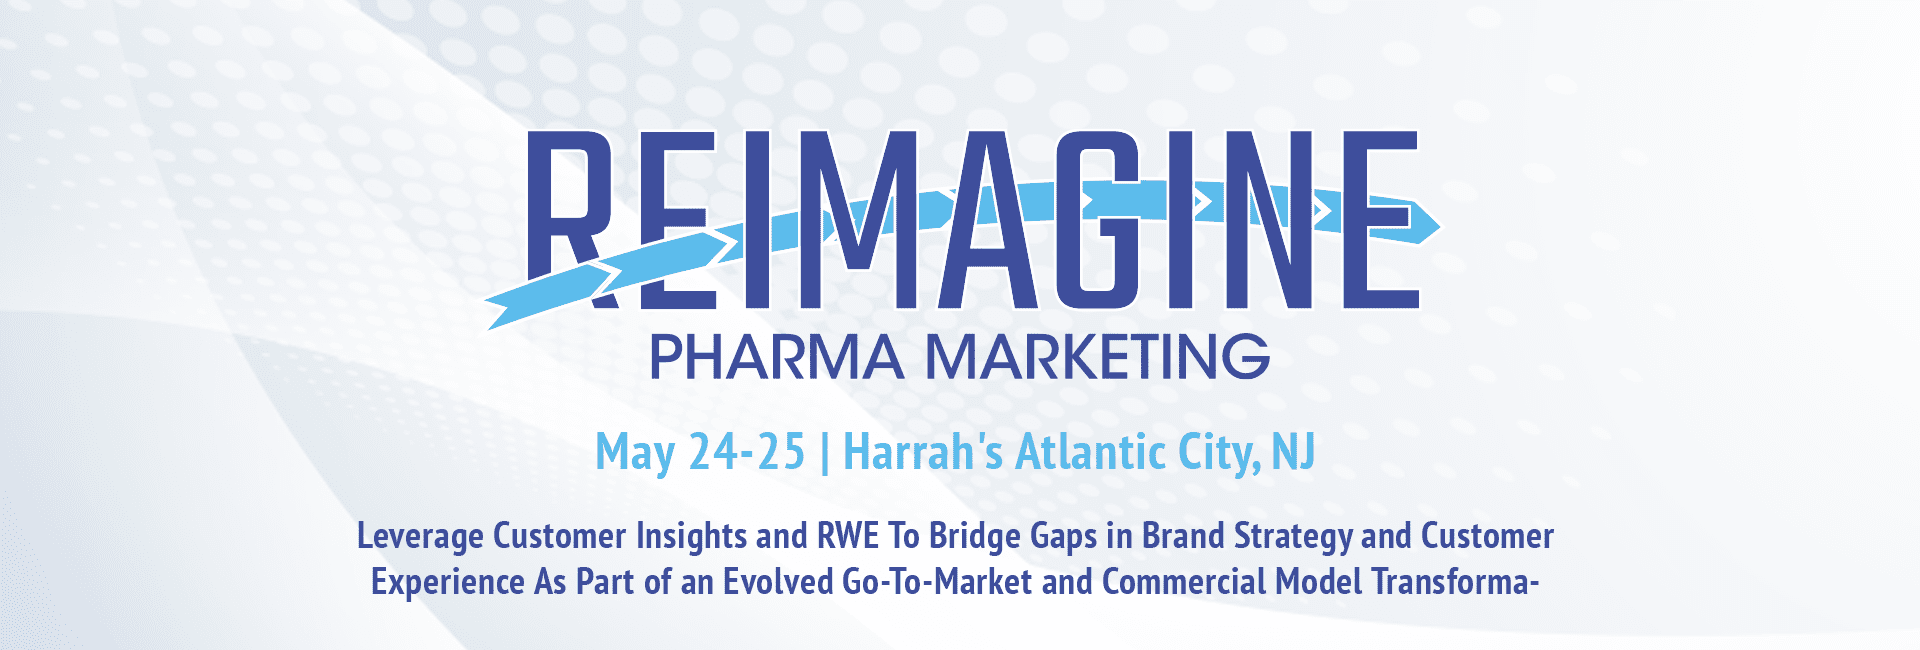 Re Imagine Pharma Marketing